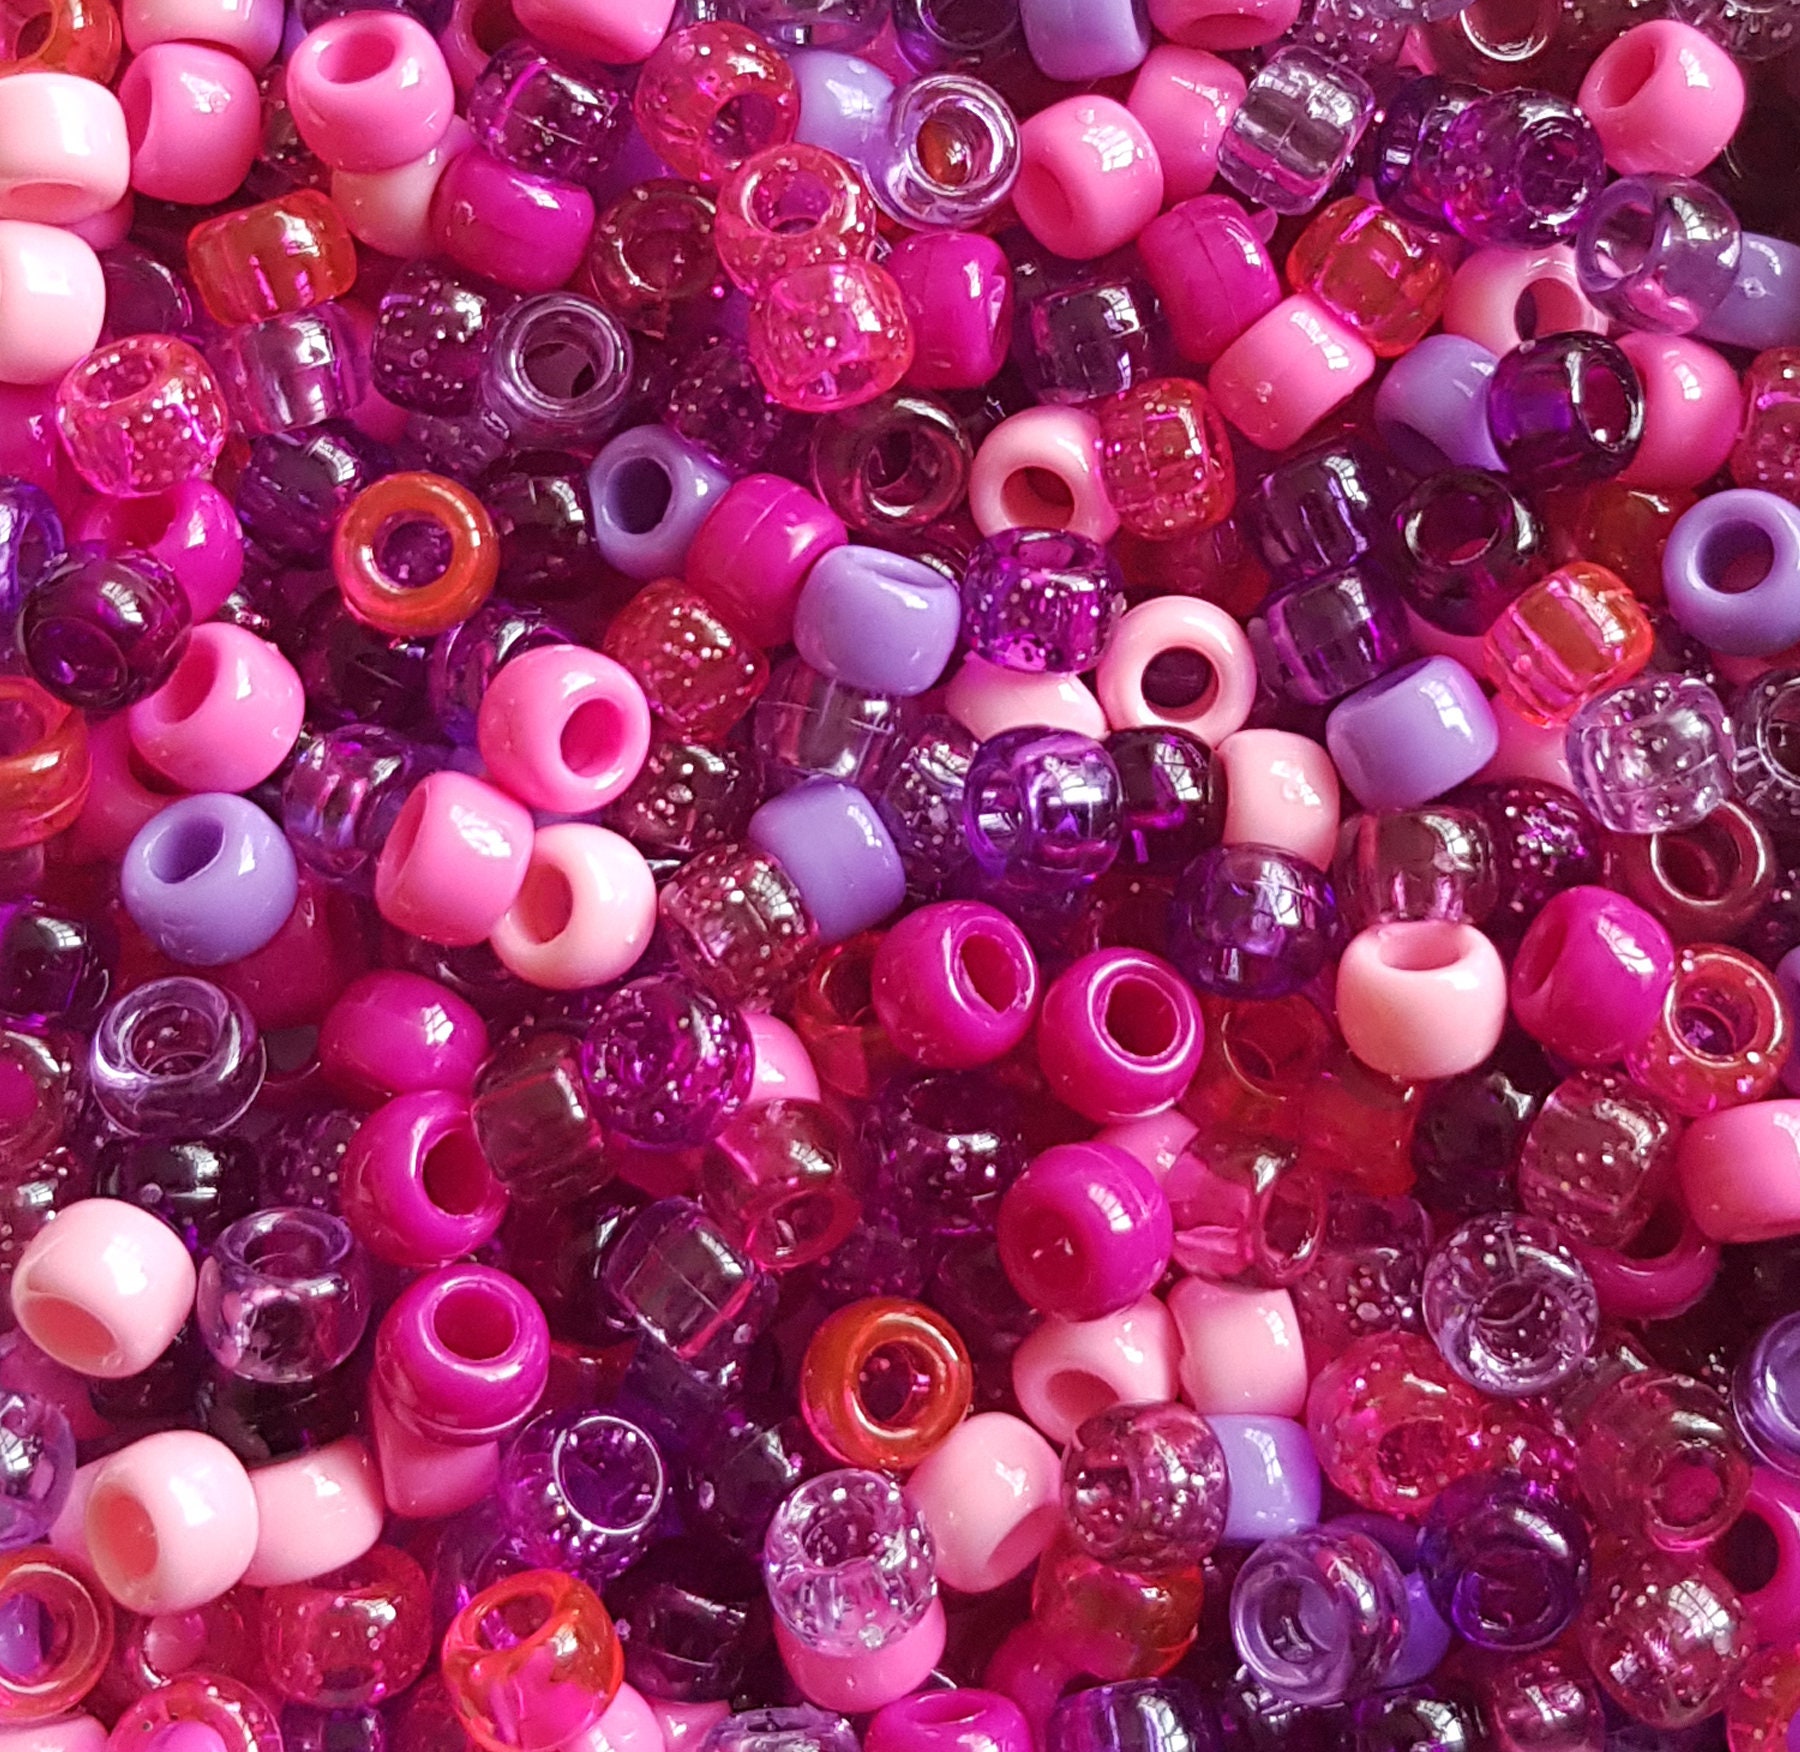 Lilac Purple Opaque Plastic Pony Beads 6 x 9mm, 150 beads